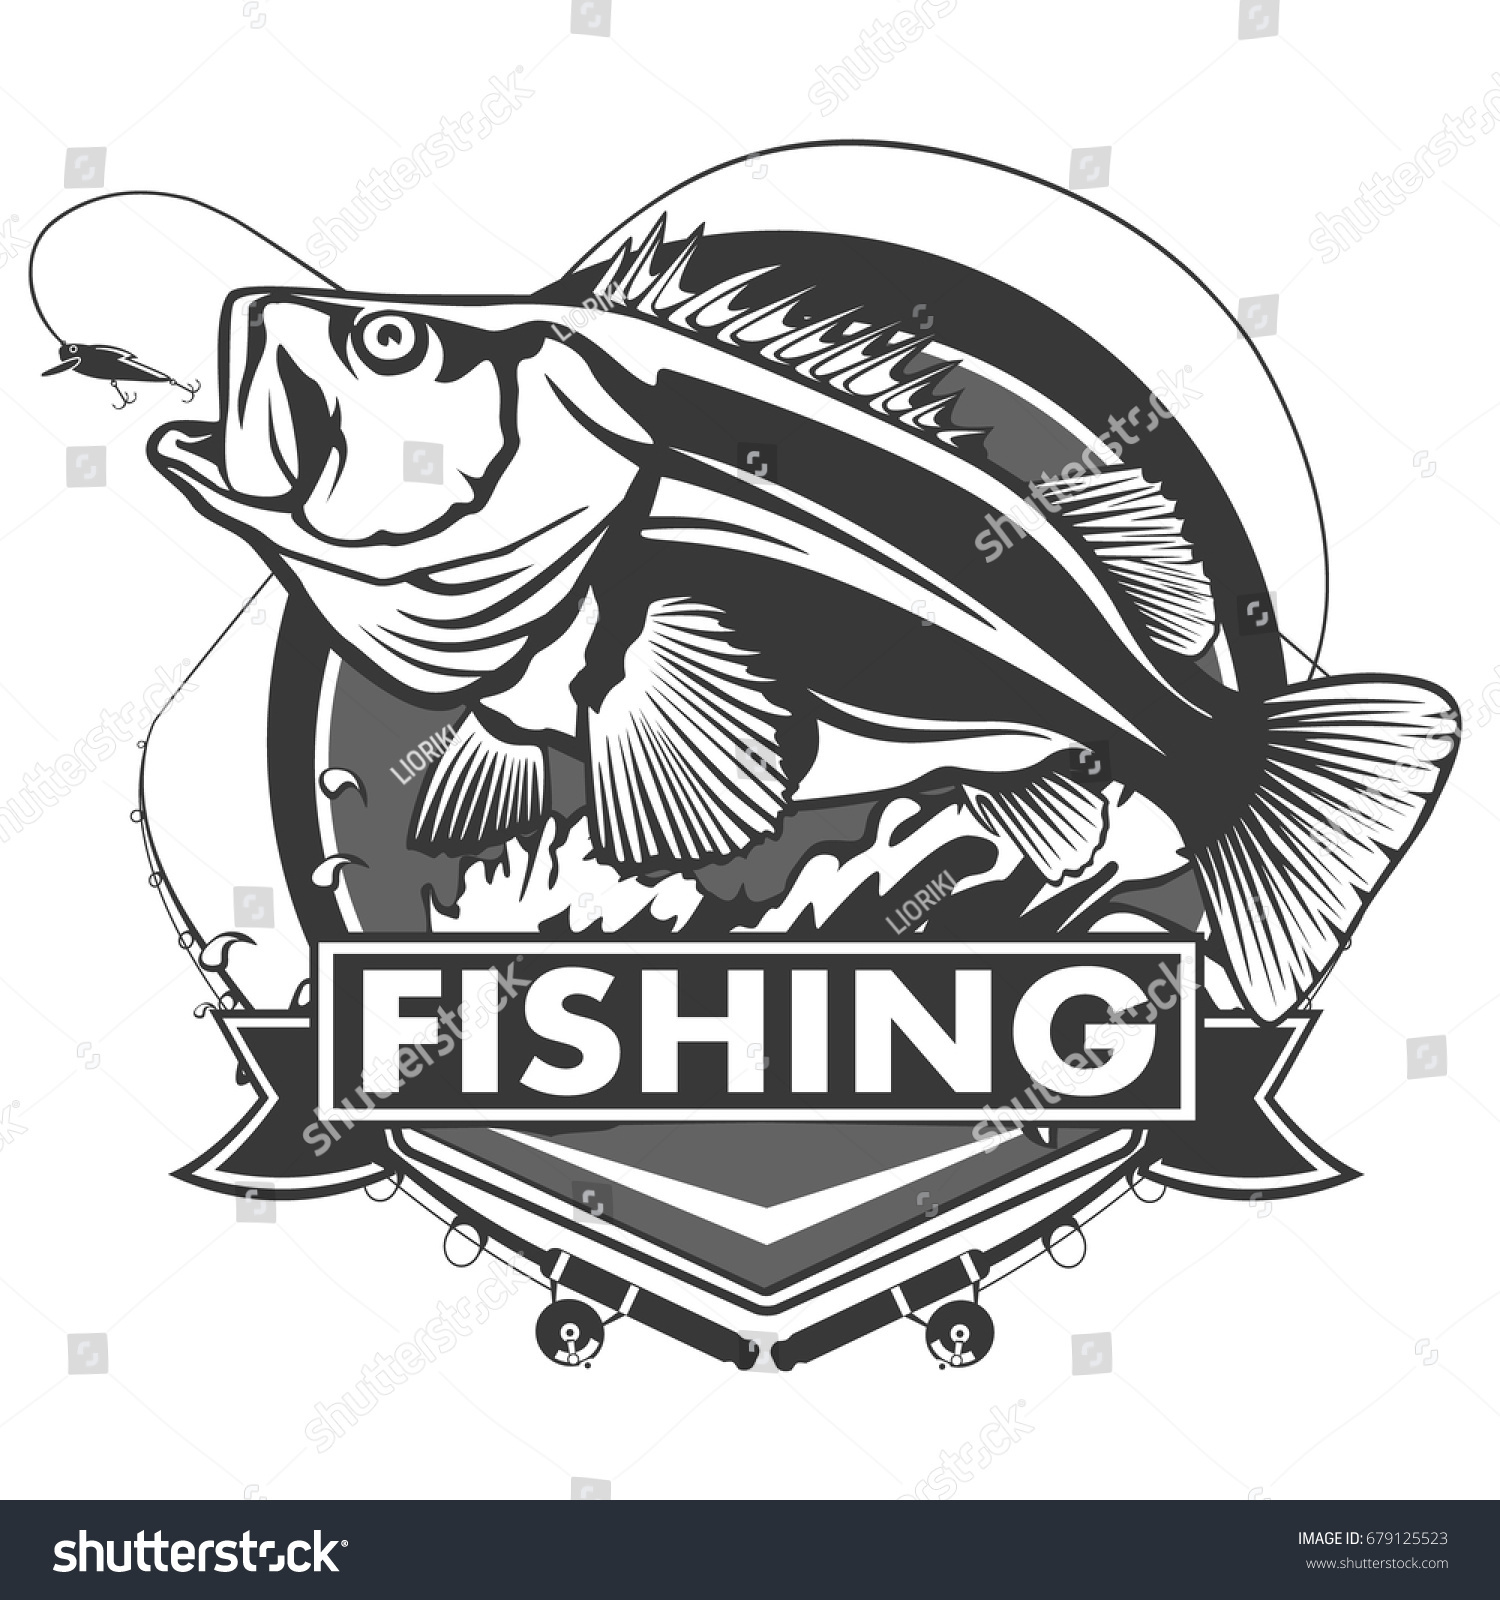 Download Fishing Logorock Fish Bass Fish Rod Stock Vector 679125523 ...